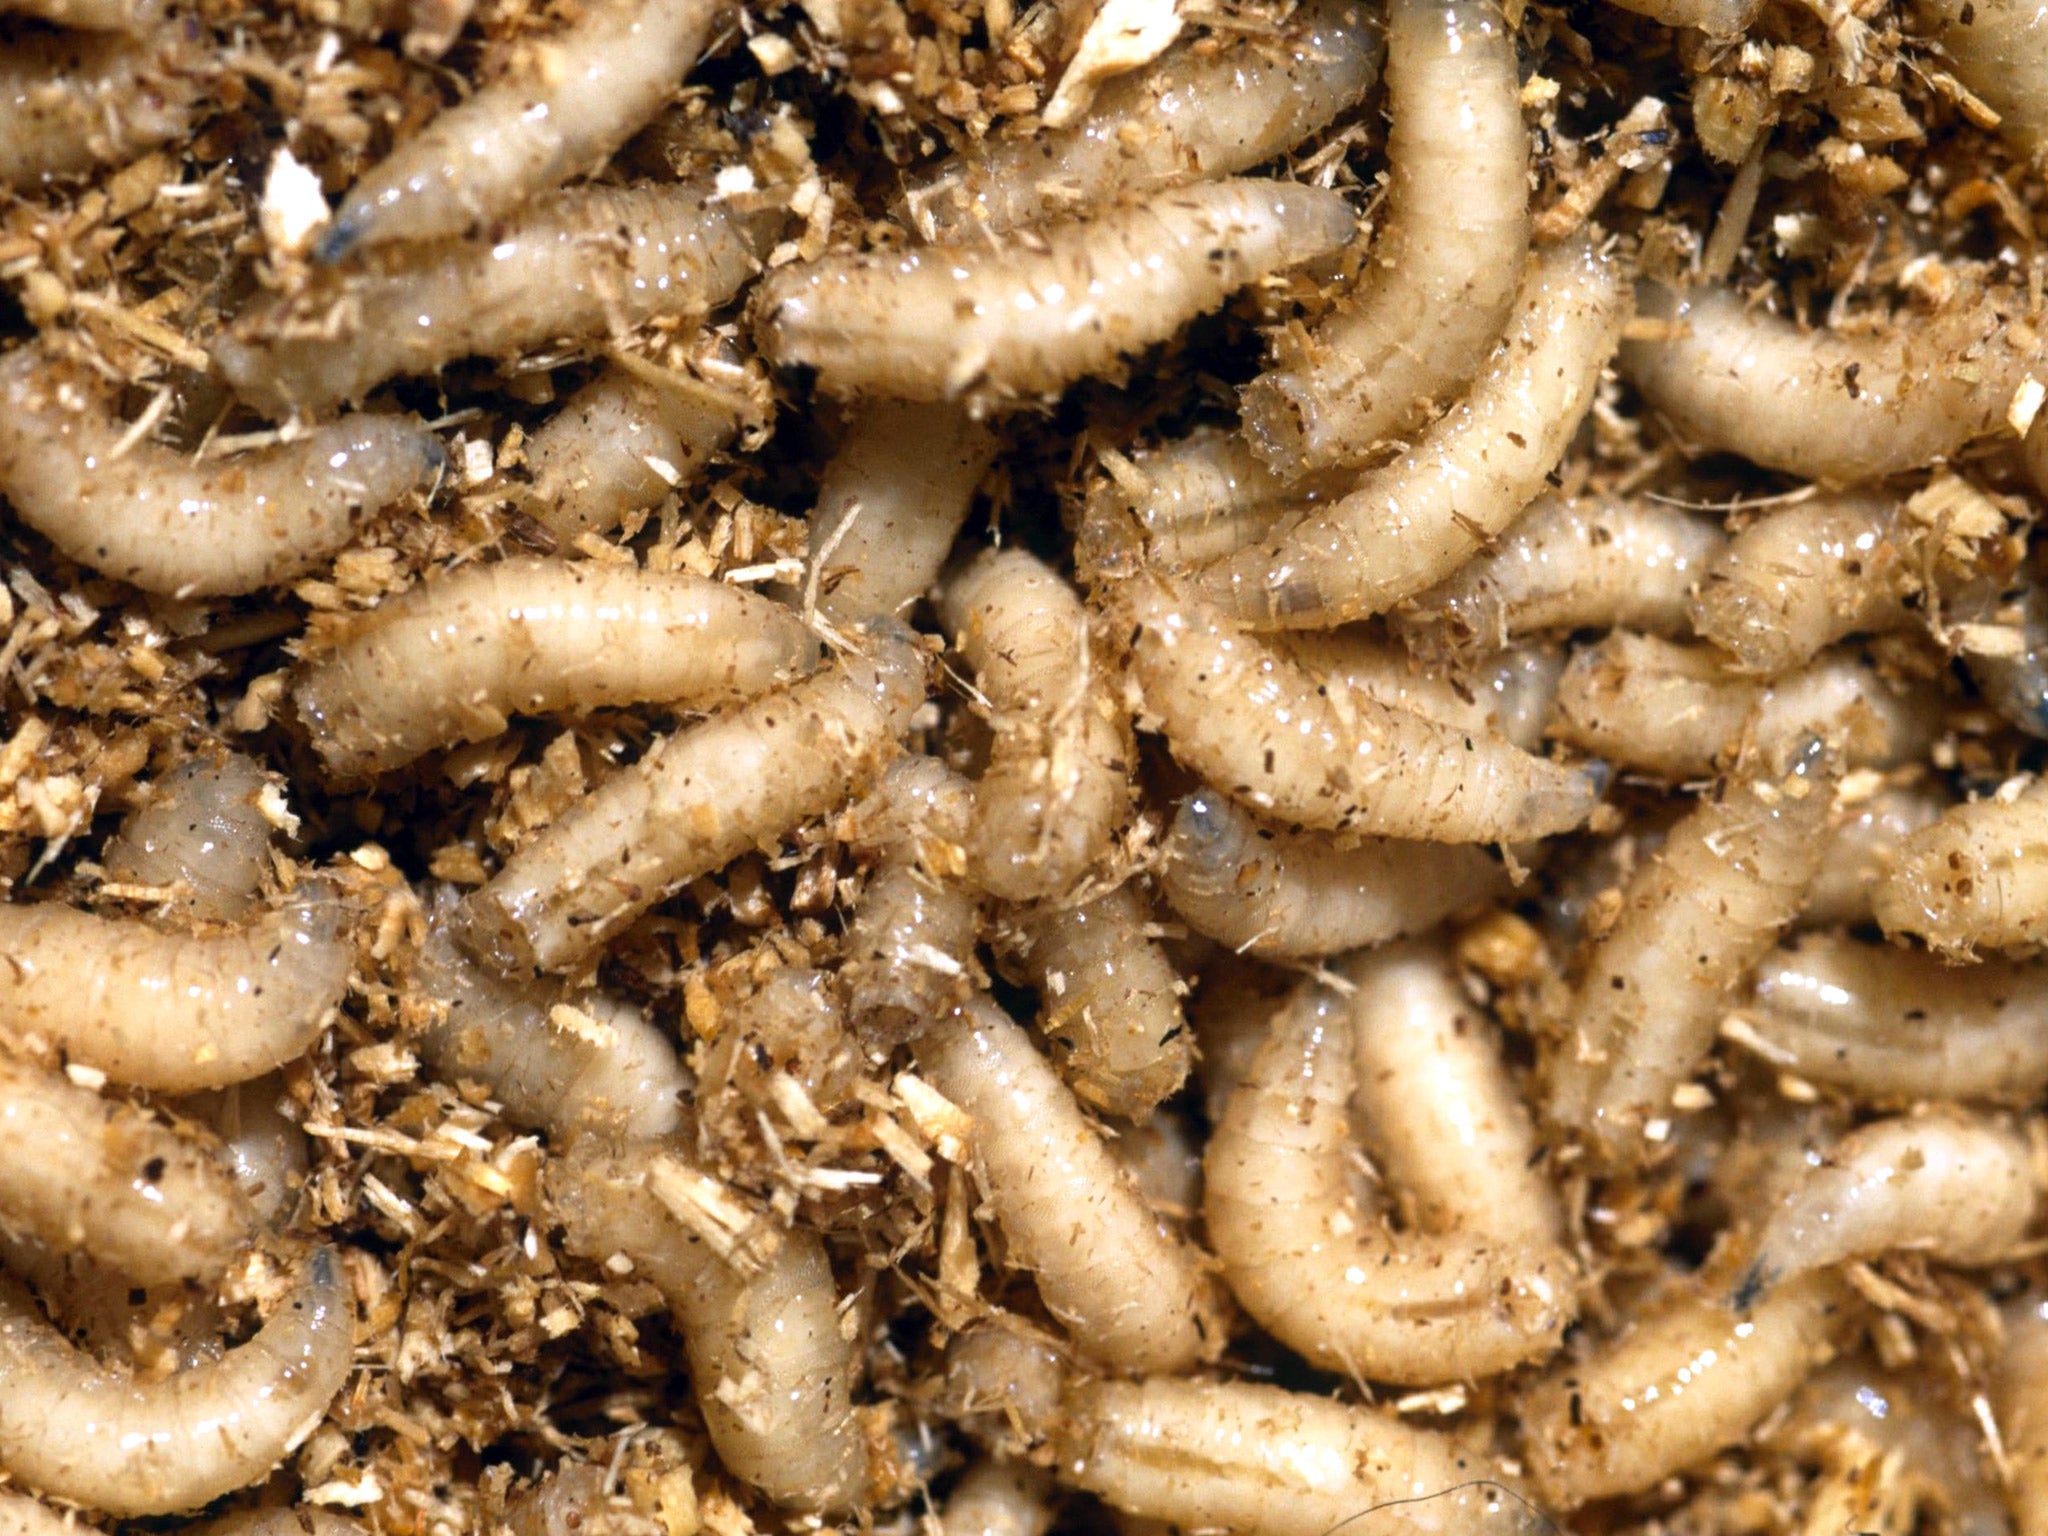 Maggots are considered universally repulsive